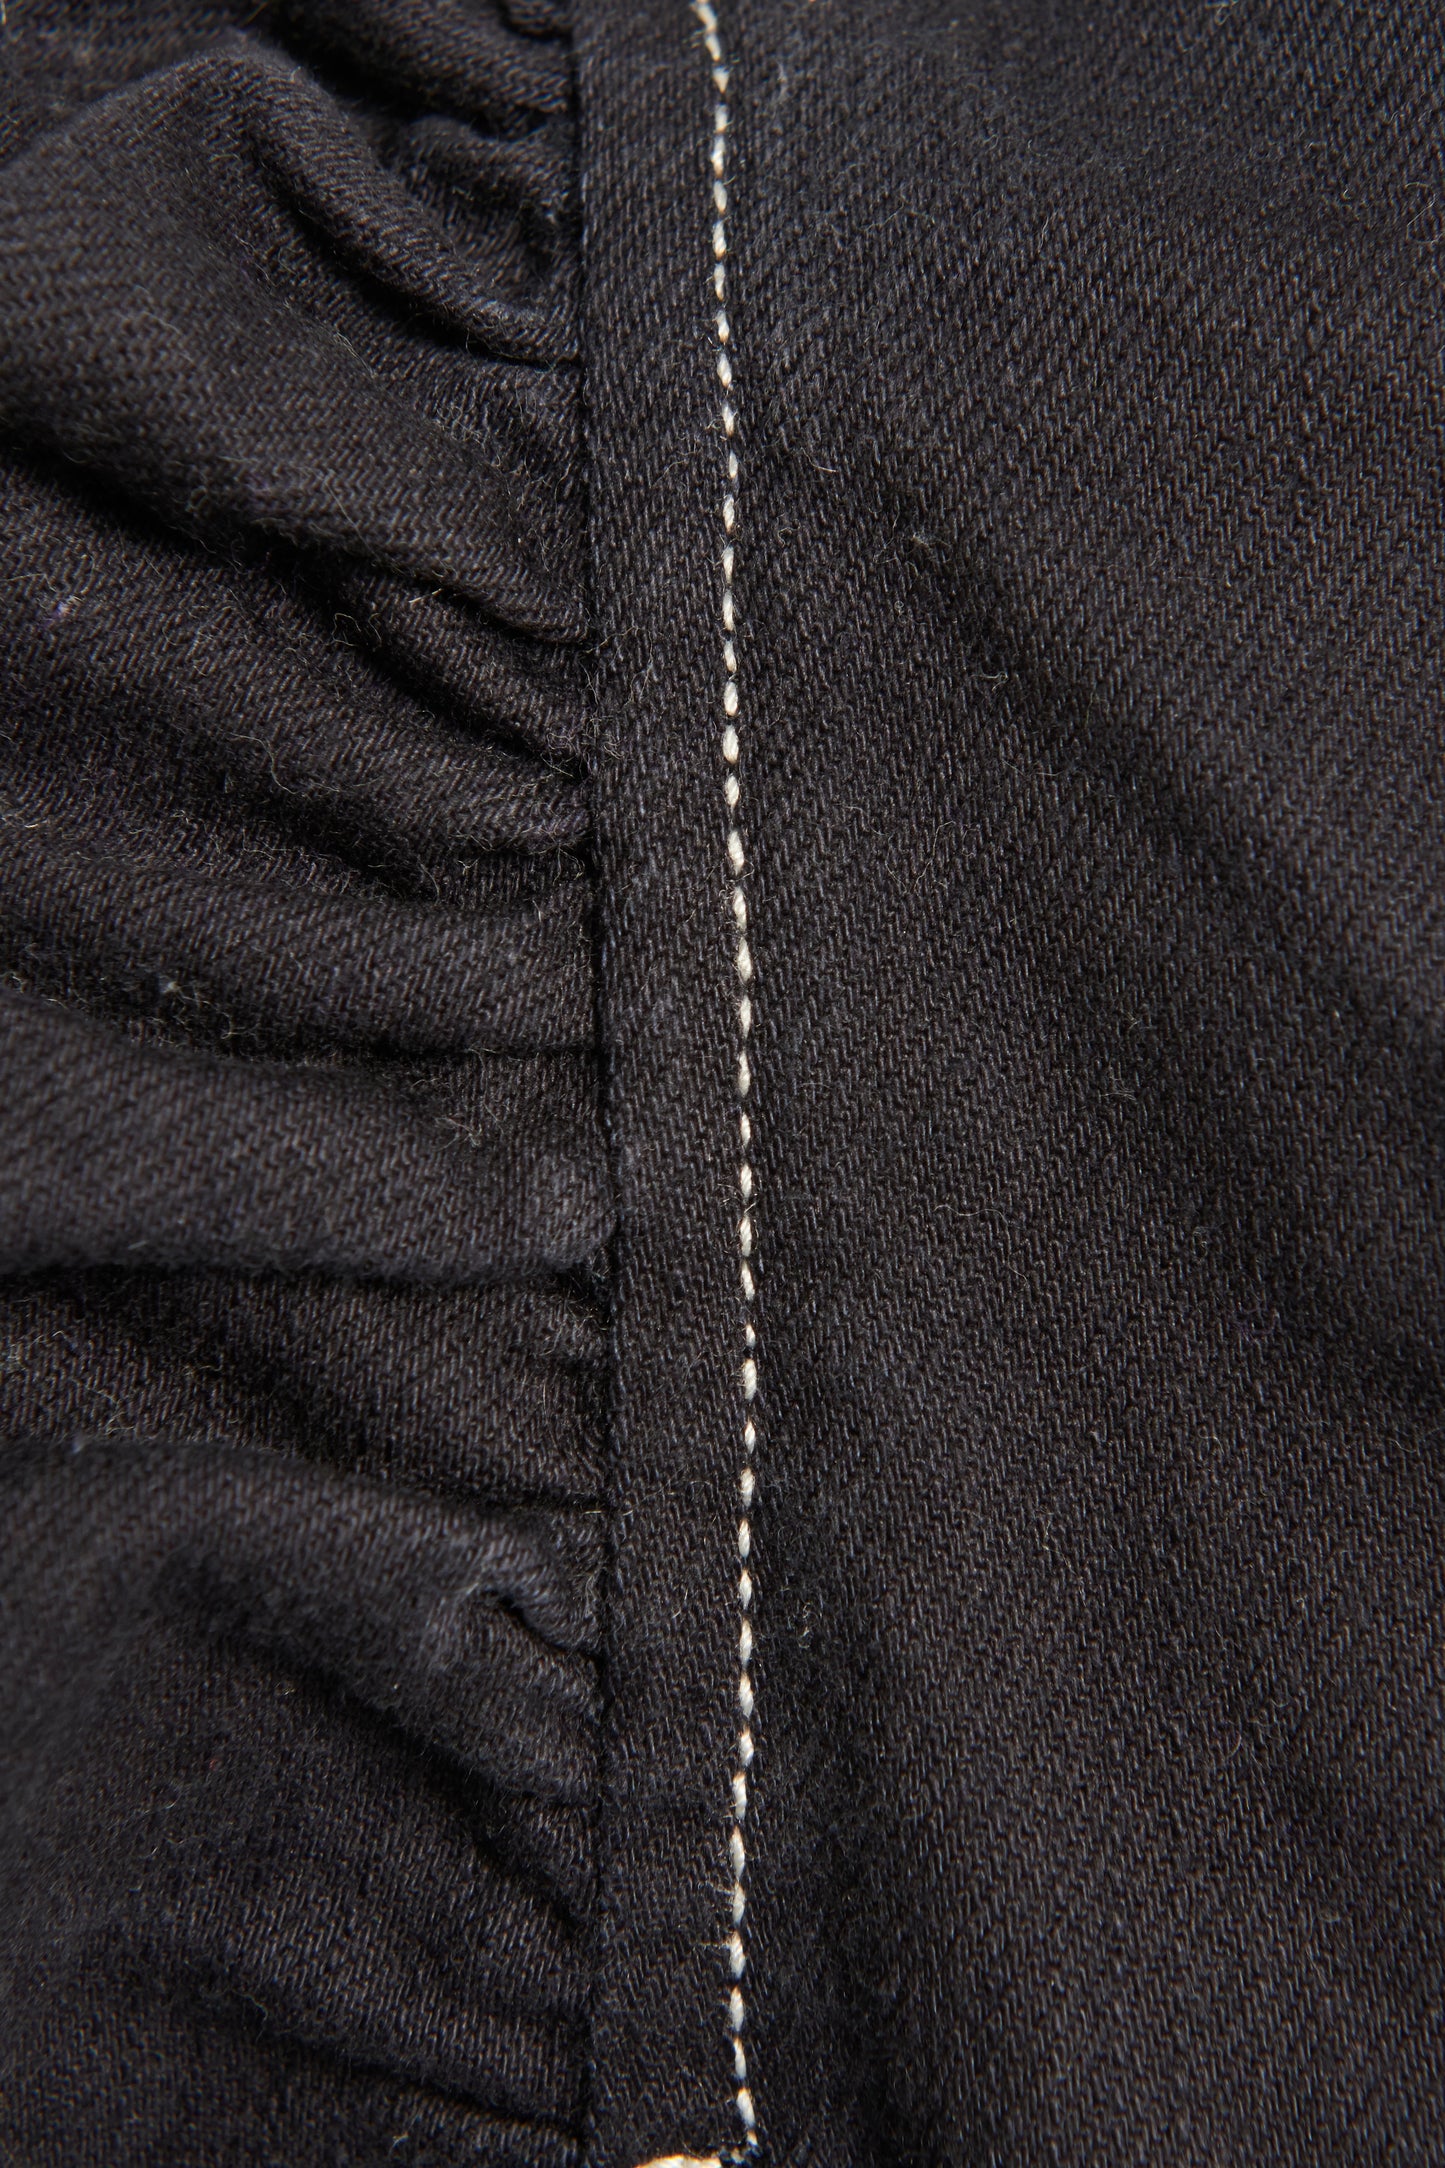 Dark Navy Blue Denim Preowned Top with White Stitching